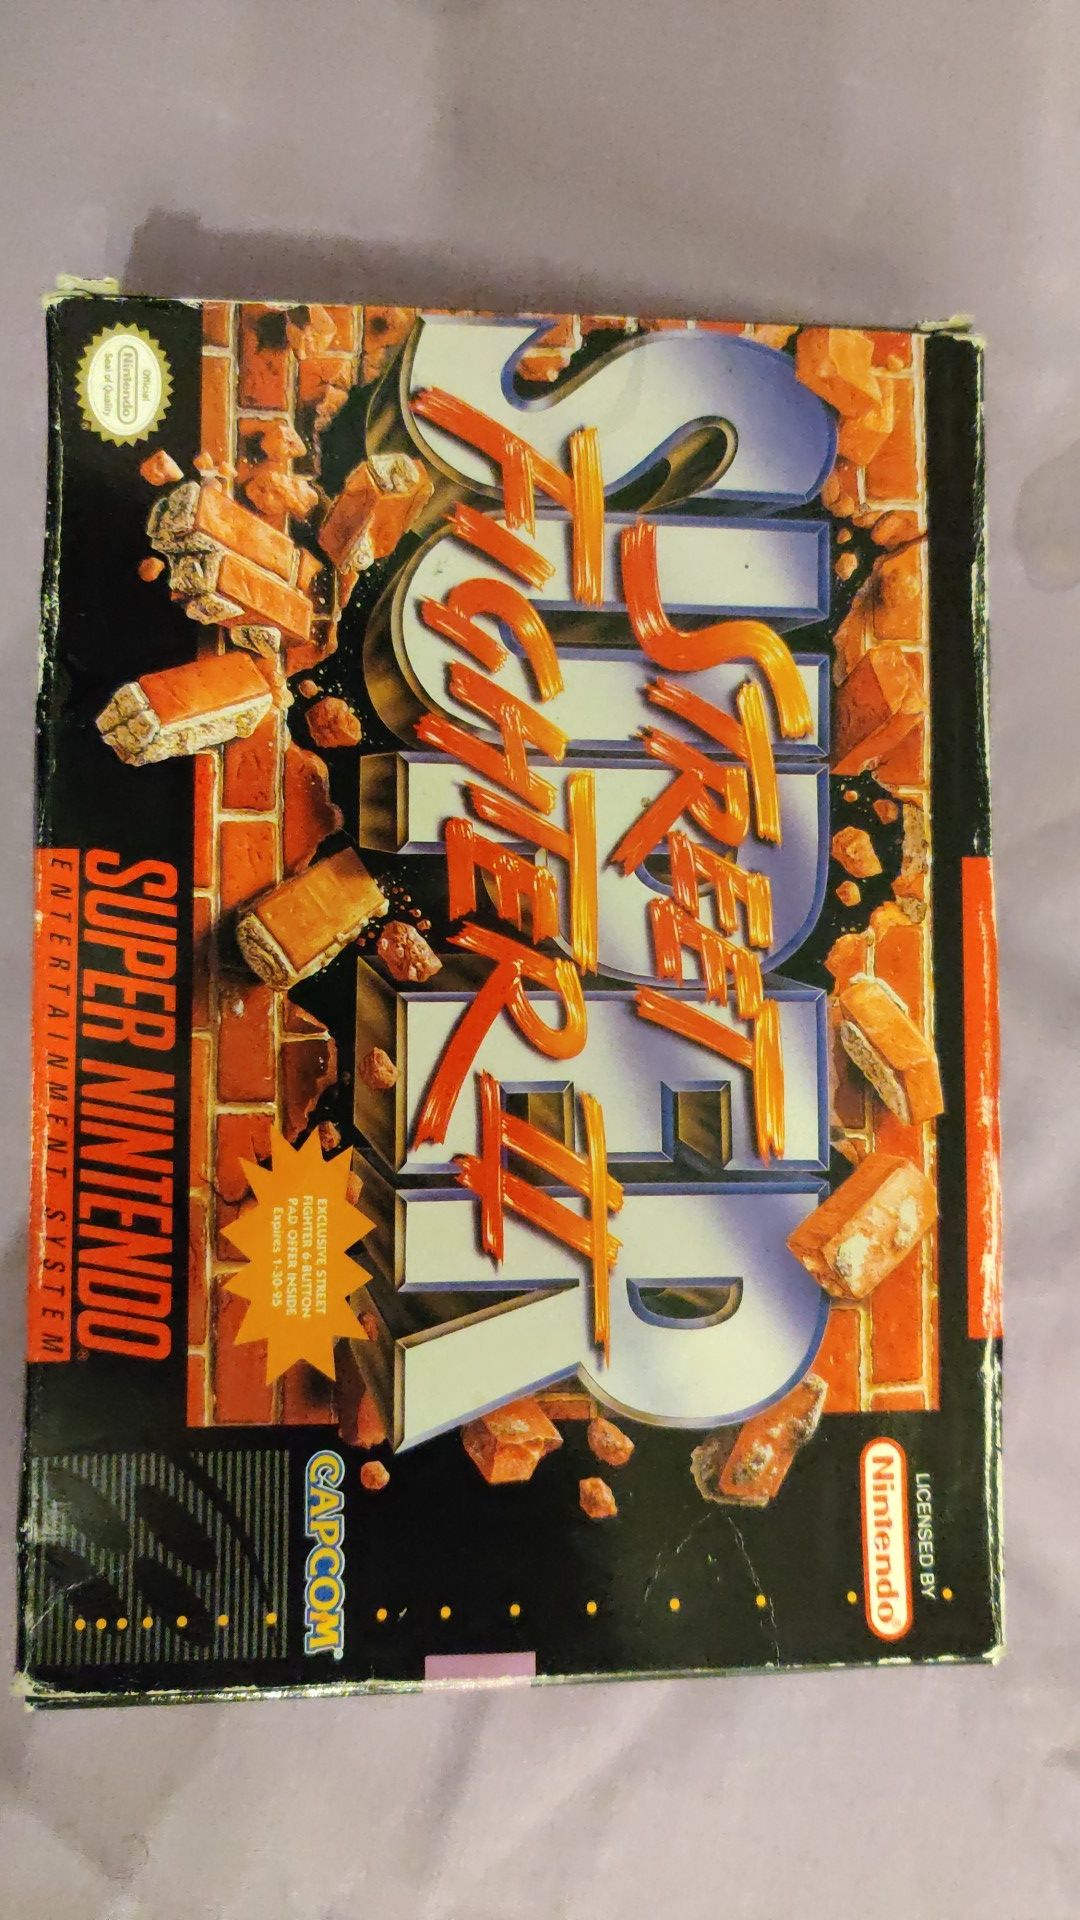 Street Fighter 2(SNES) brand new